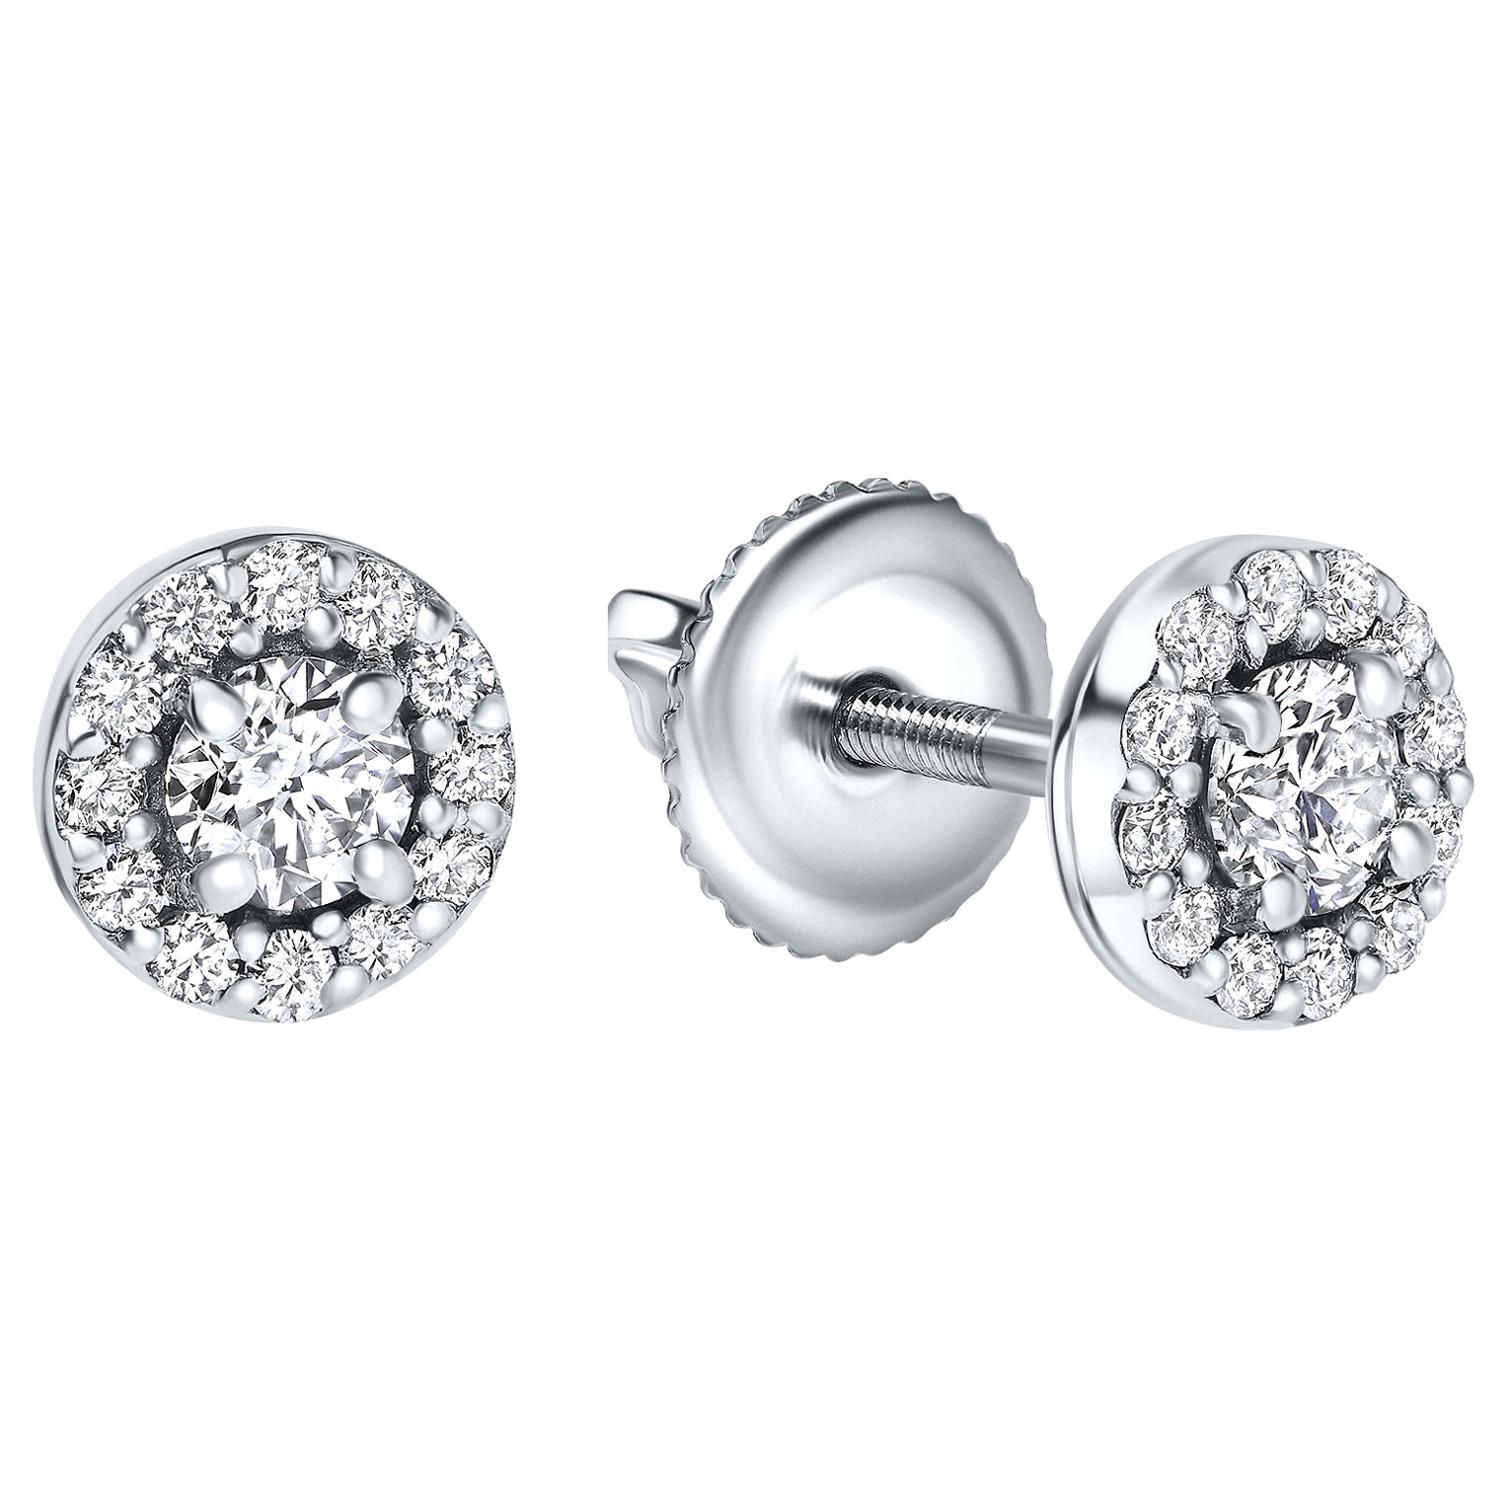 0.38 Carat Diamond Mini Halo Earrings in 14 Karat White Gold - Shlomit Rogel For Sale